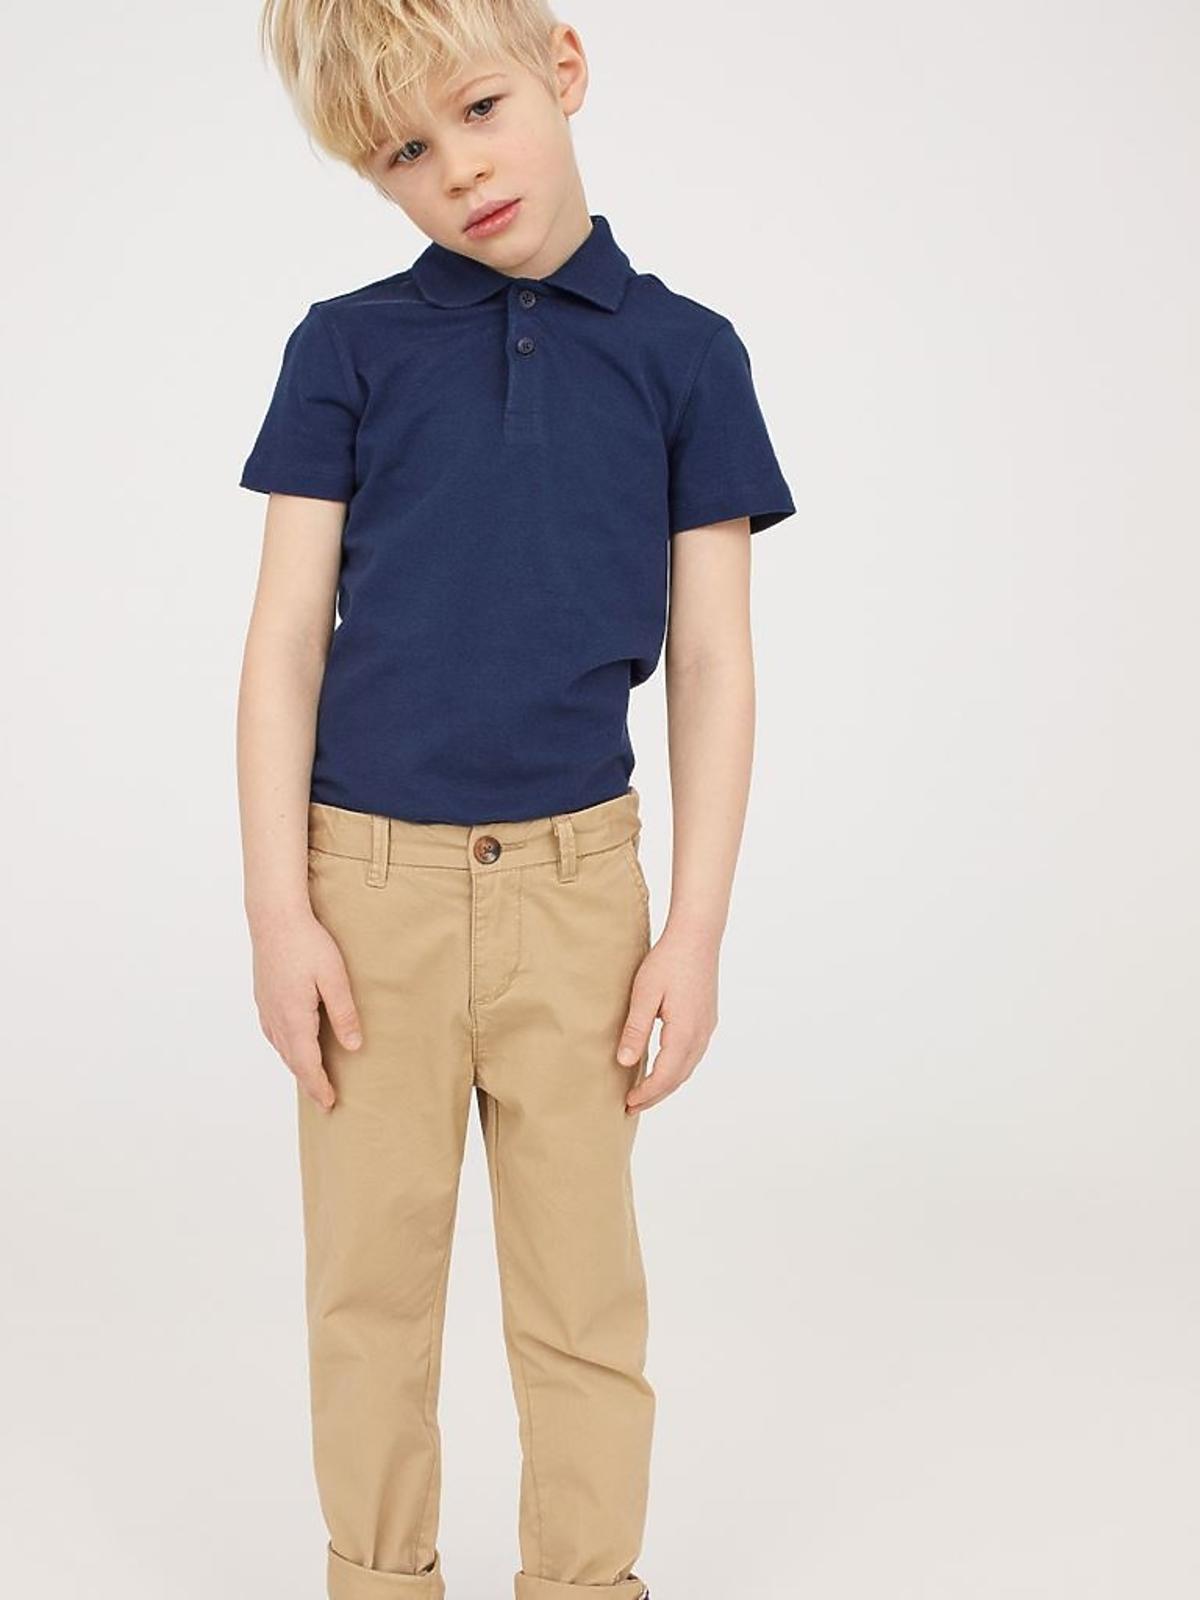 chinosy piaskowe i granatowy t-shirt H&M dla chłopca